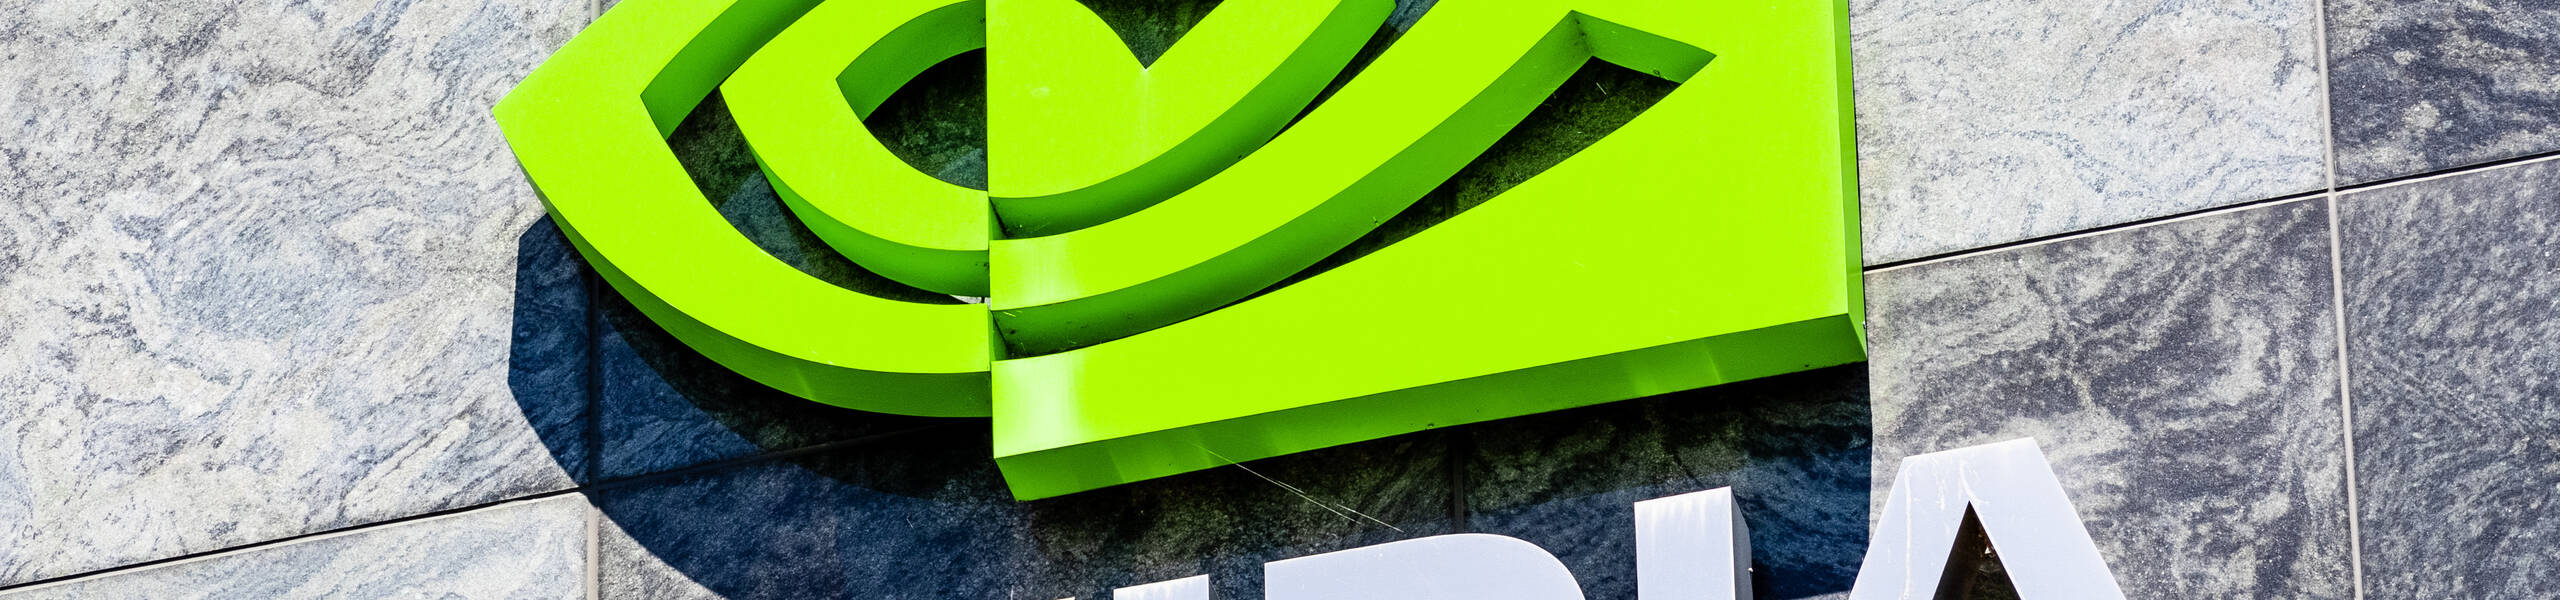 Is Nvidia a Buy ahead of Earnings?